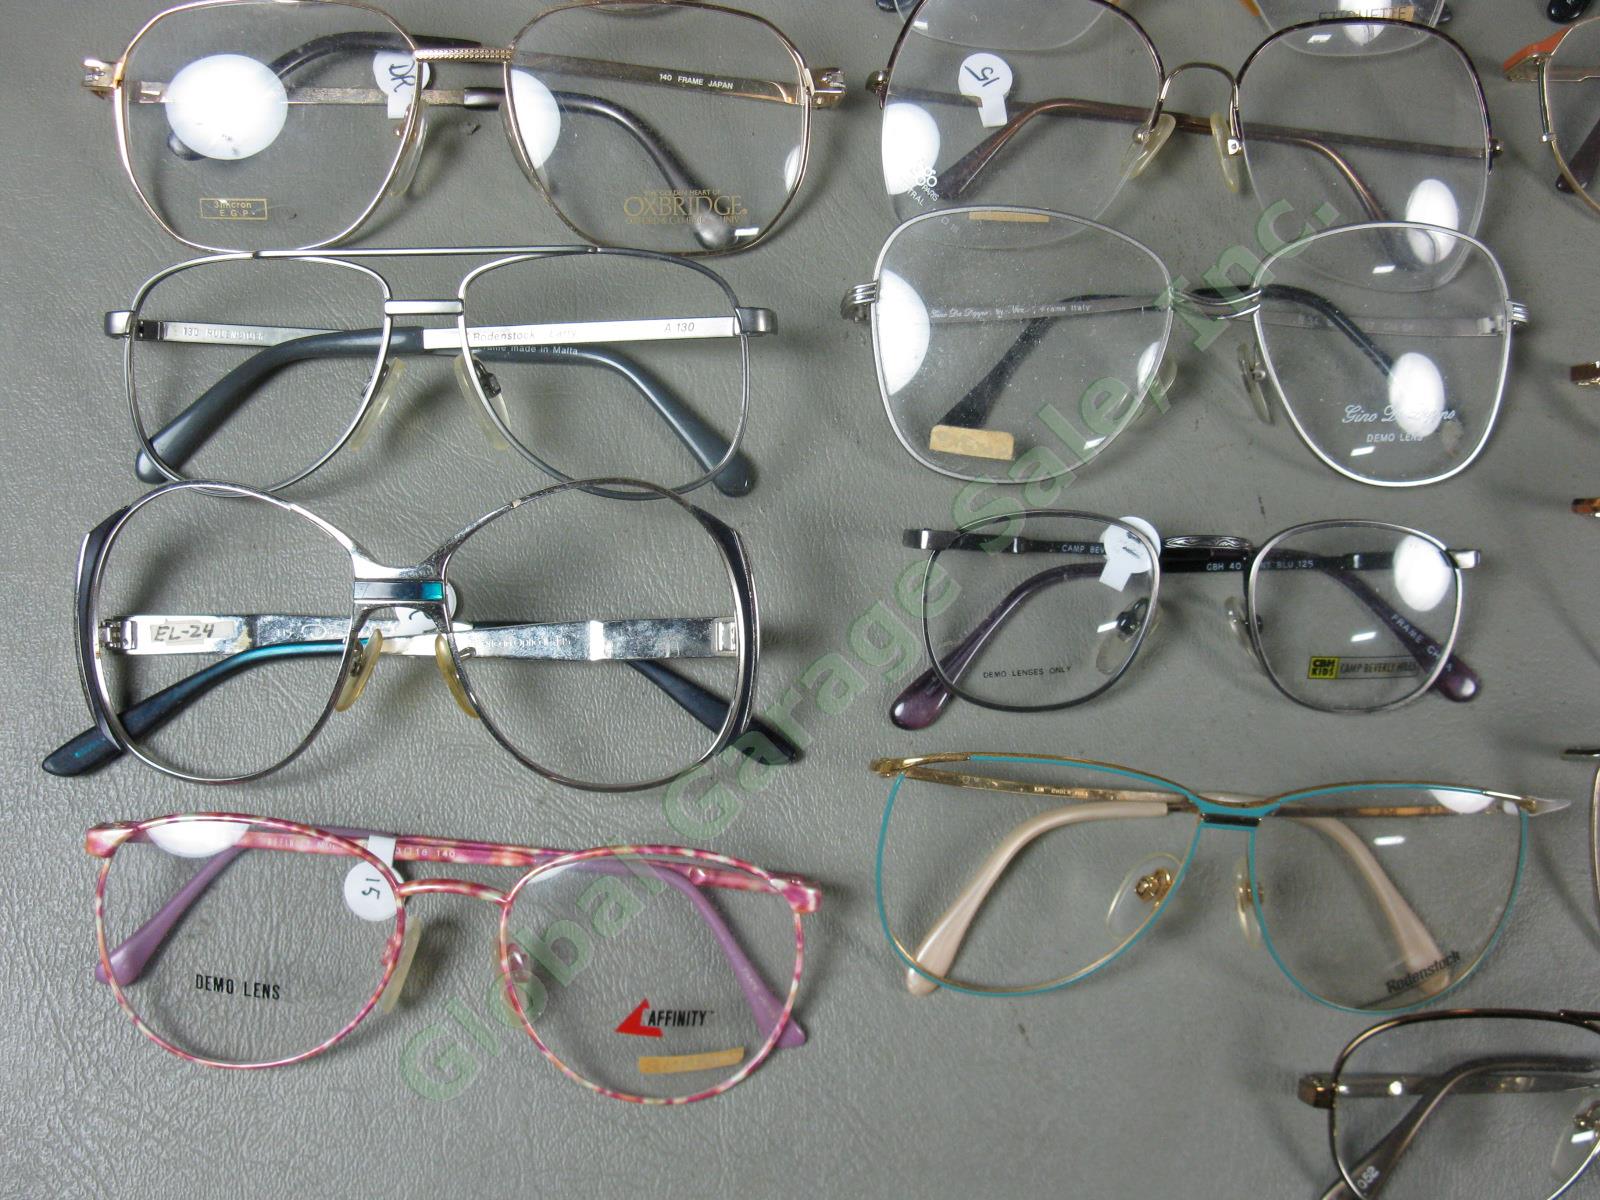 53 Pairs NEW NOS Metal Eyeglass Glasses Frames Lot Pierre Cardin Vogue Zeiss NR! 3